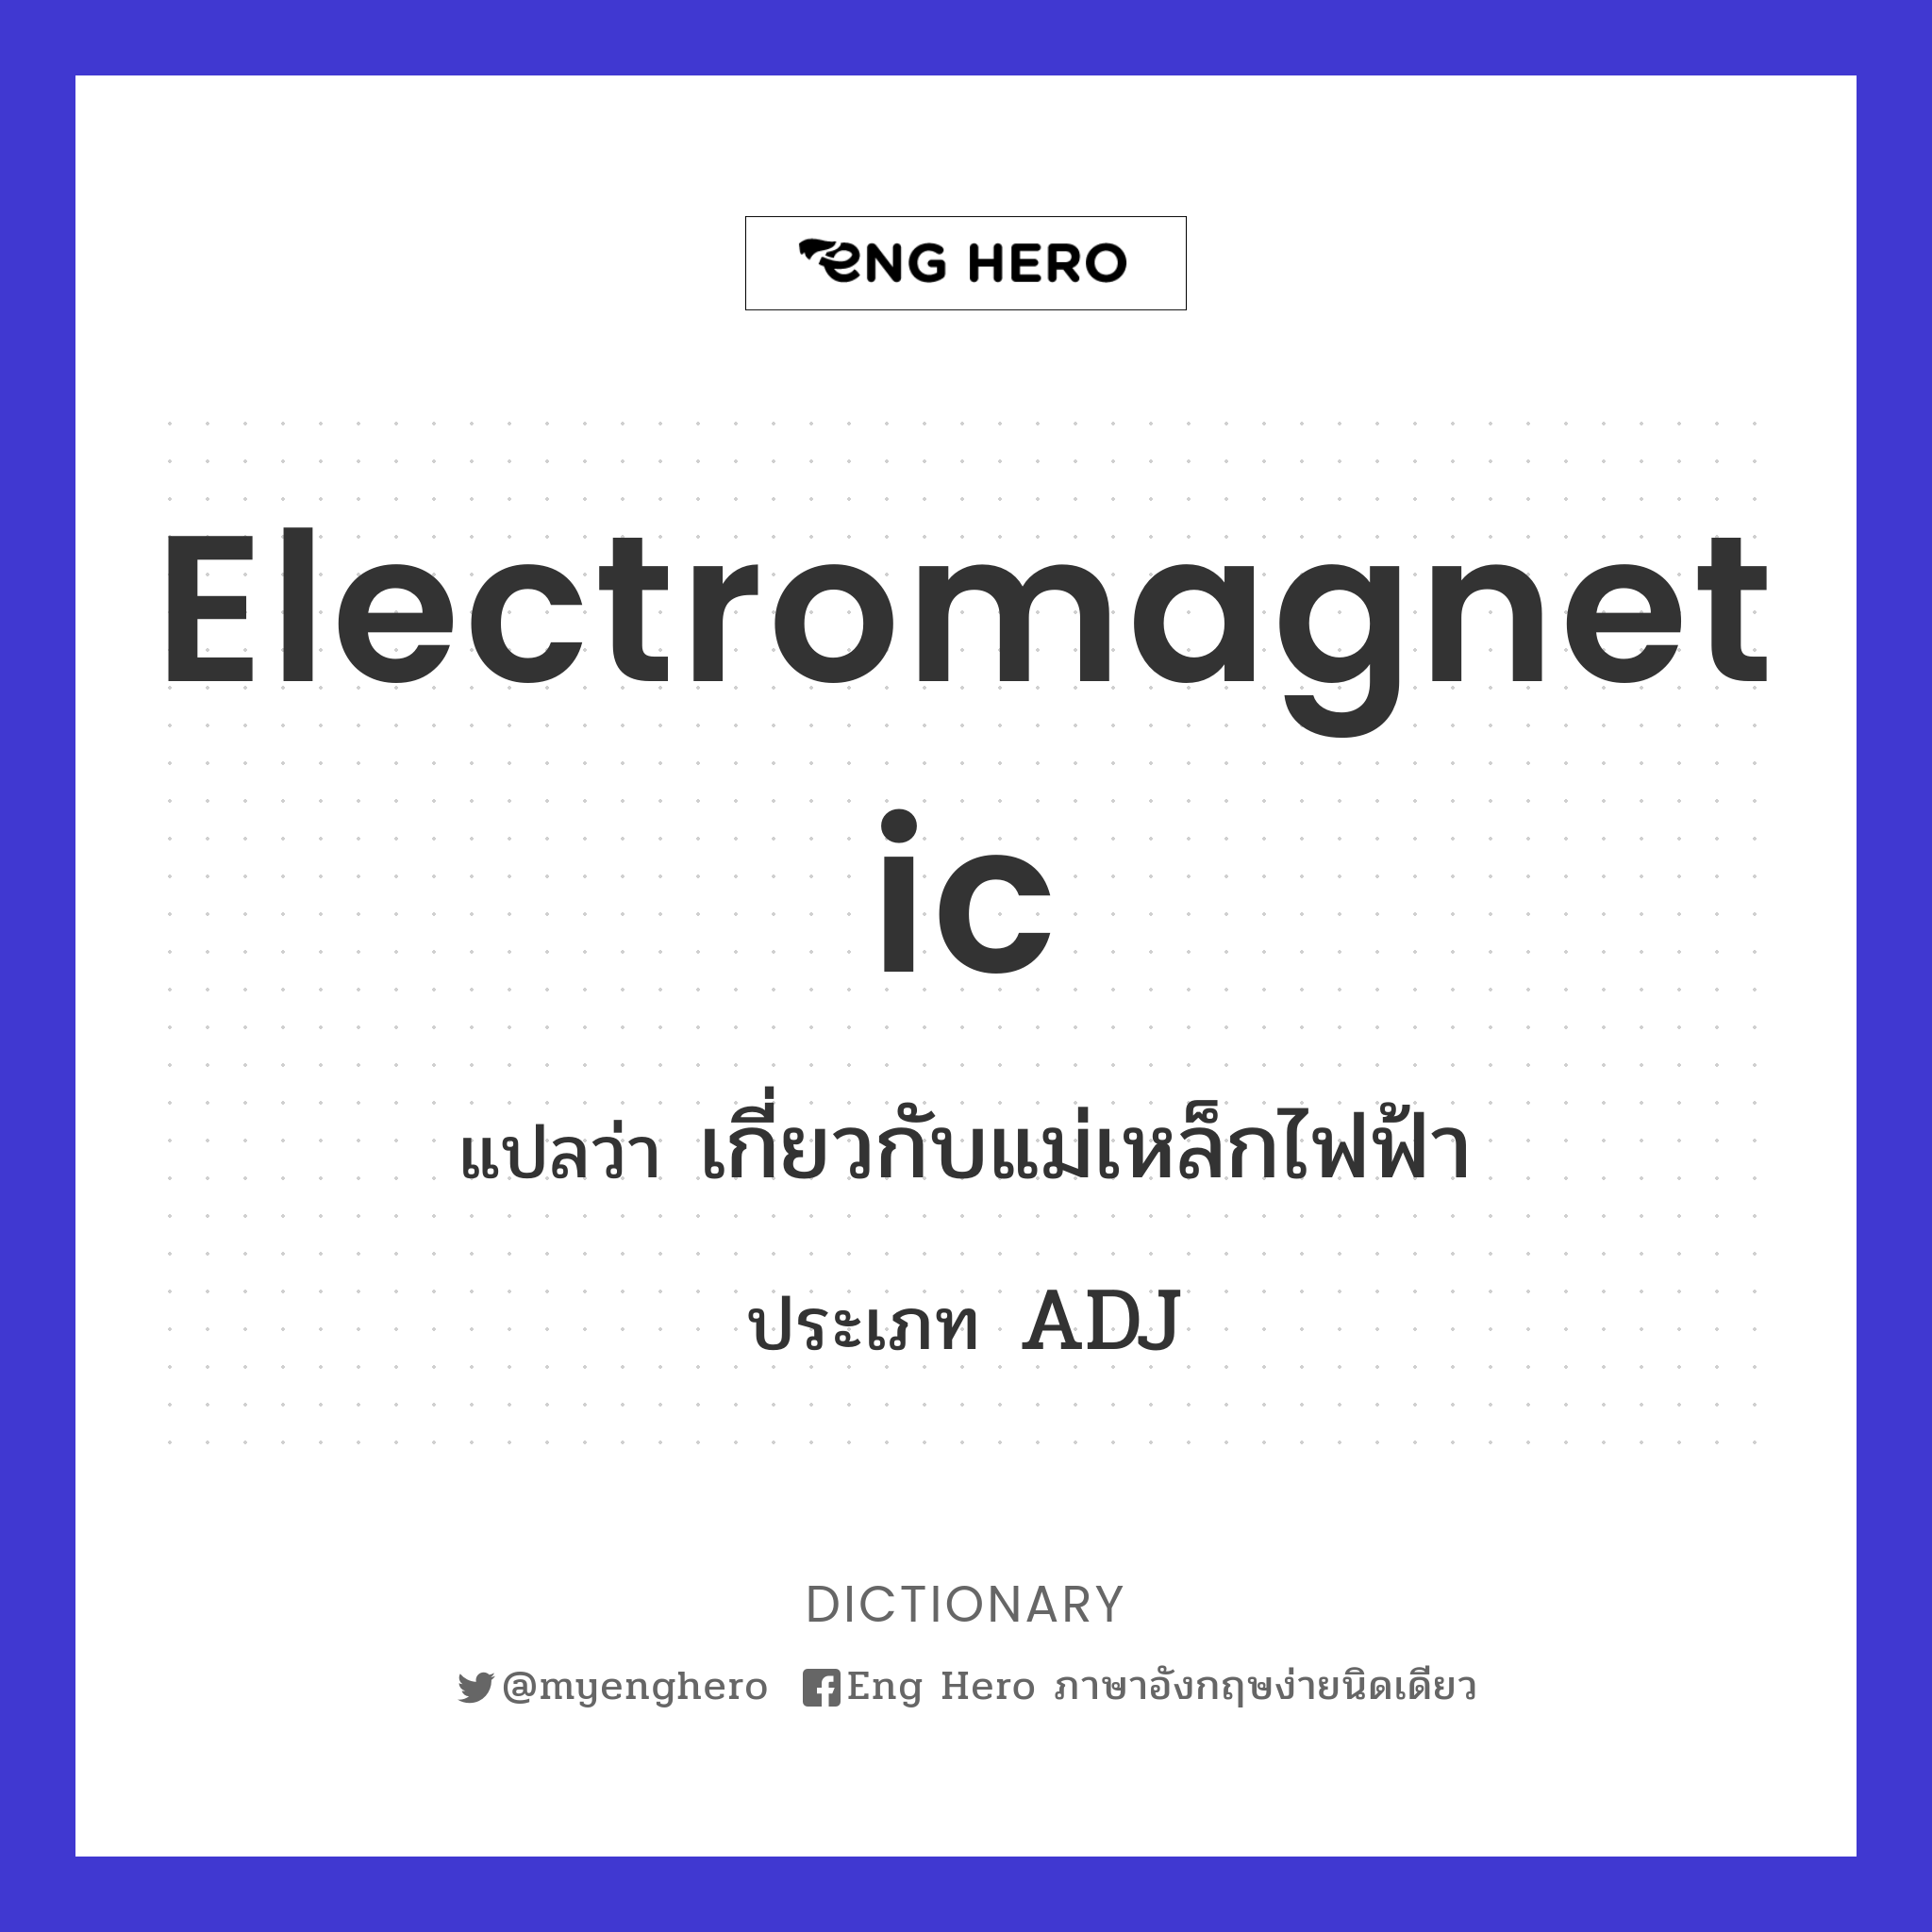 electromagnetic